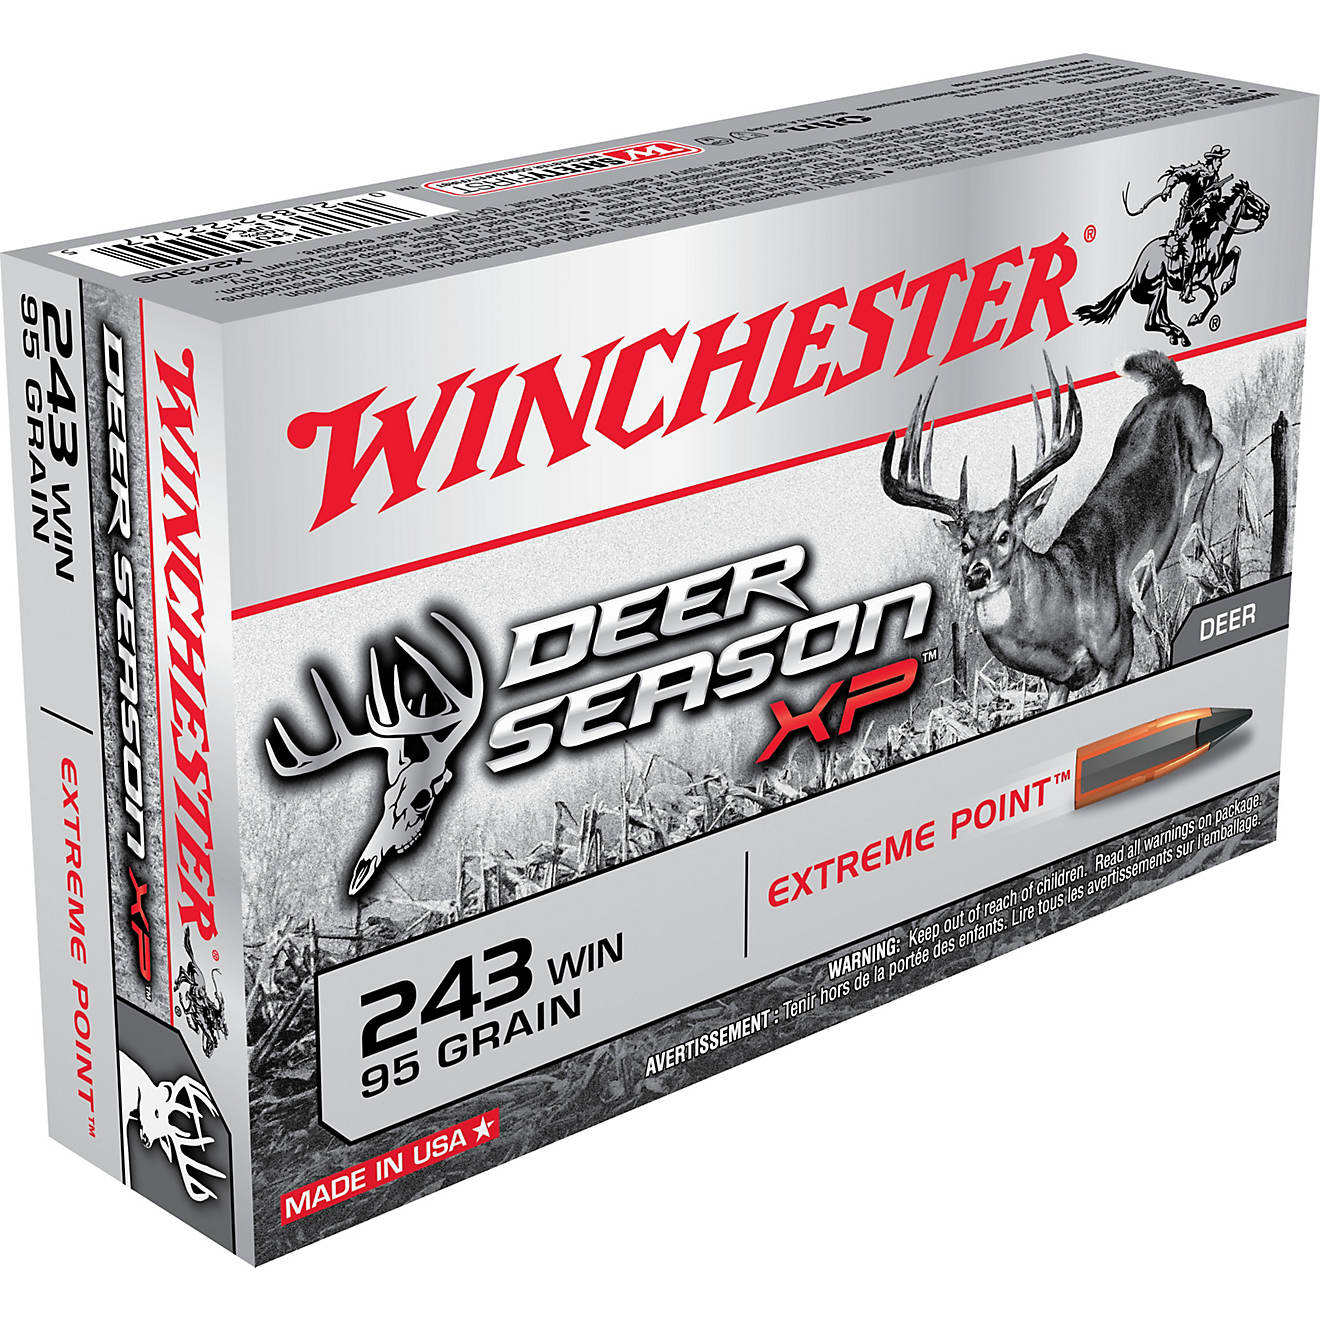 Winchester Deer Season XP .243 Winchester 95-Grain Rifle Ammunition 500rds